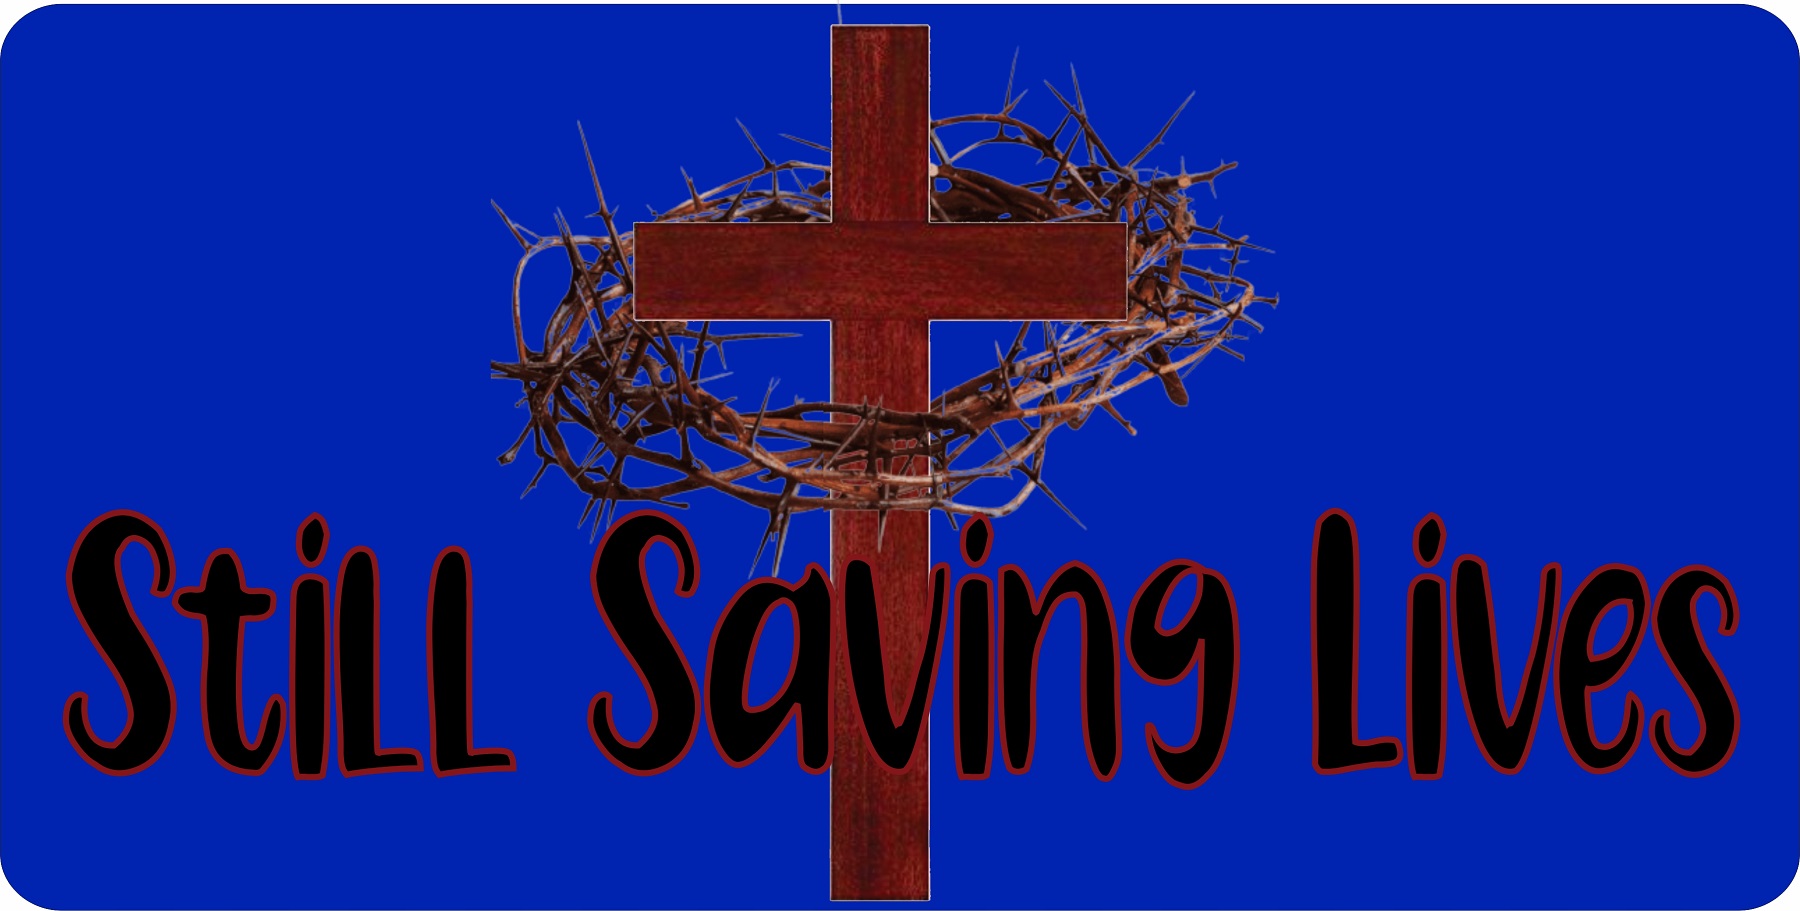 Jesus Cross Still Saving Lives Blue Photo LICENSE PLATE